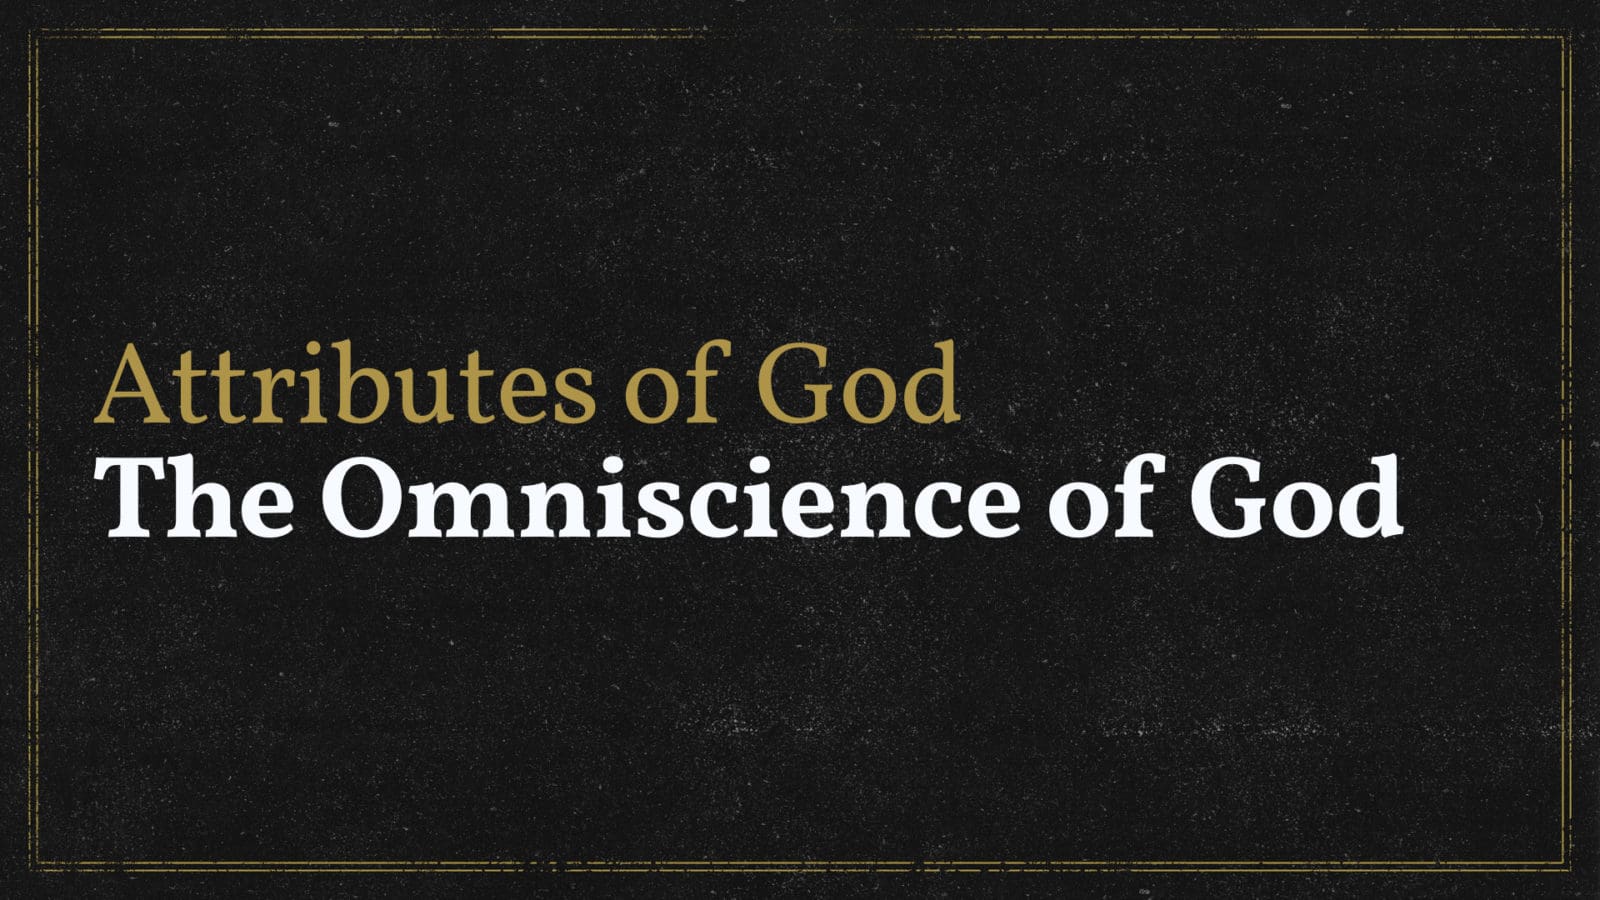 The Omniscience of God